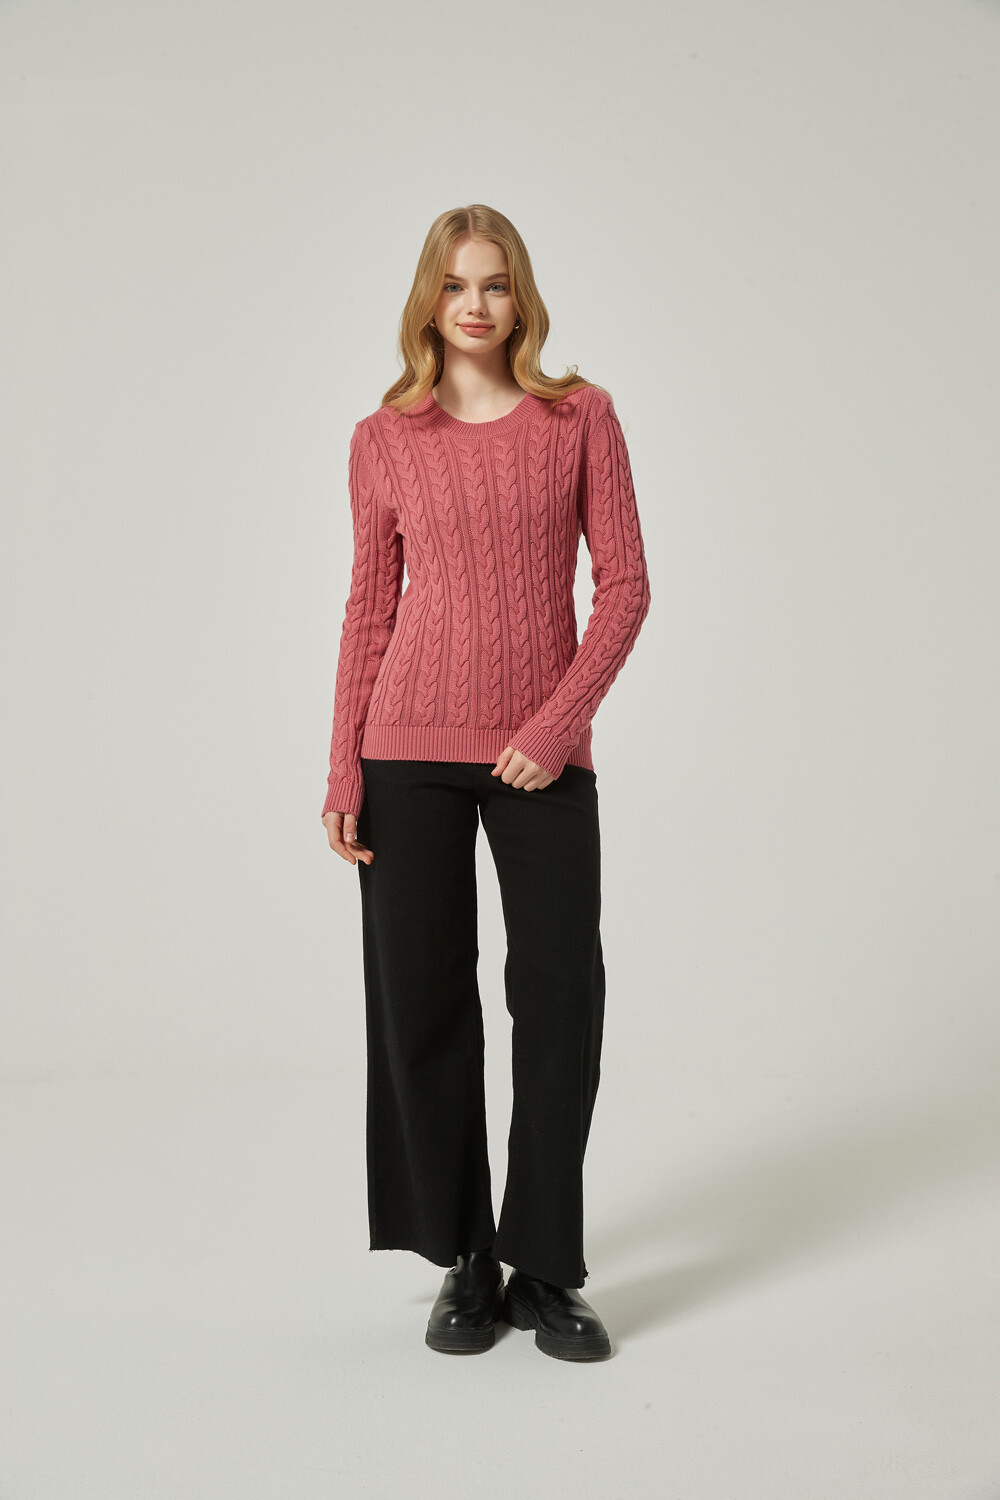 Sweater Teogonorio Rosa Oscuro